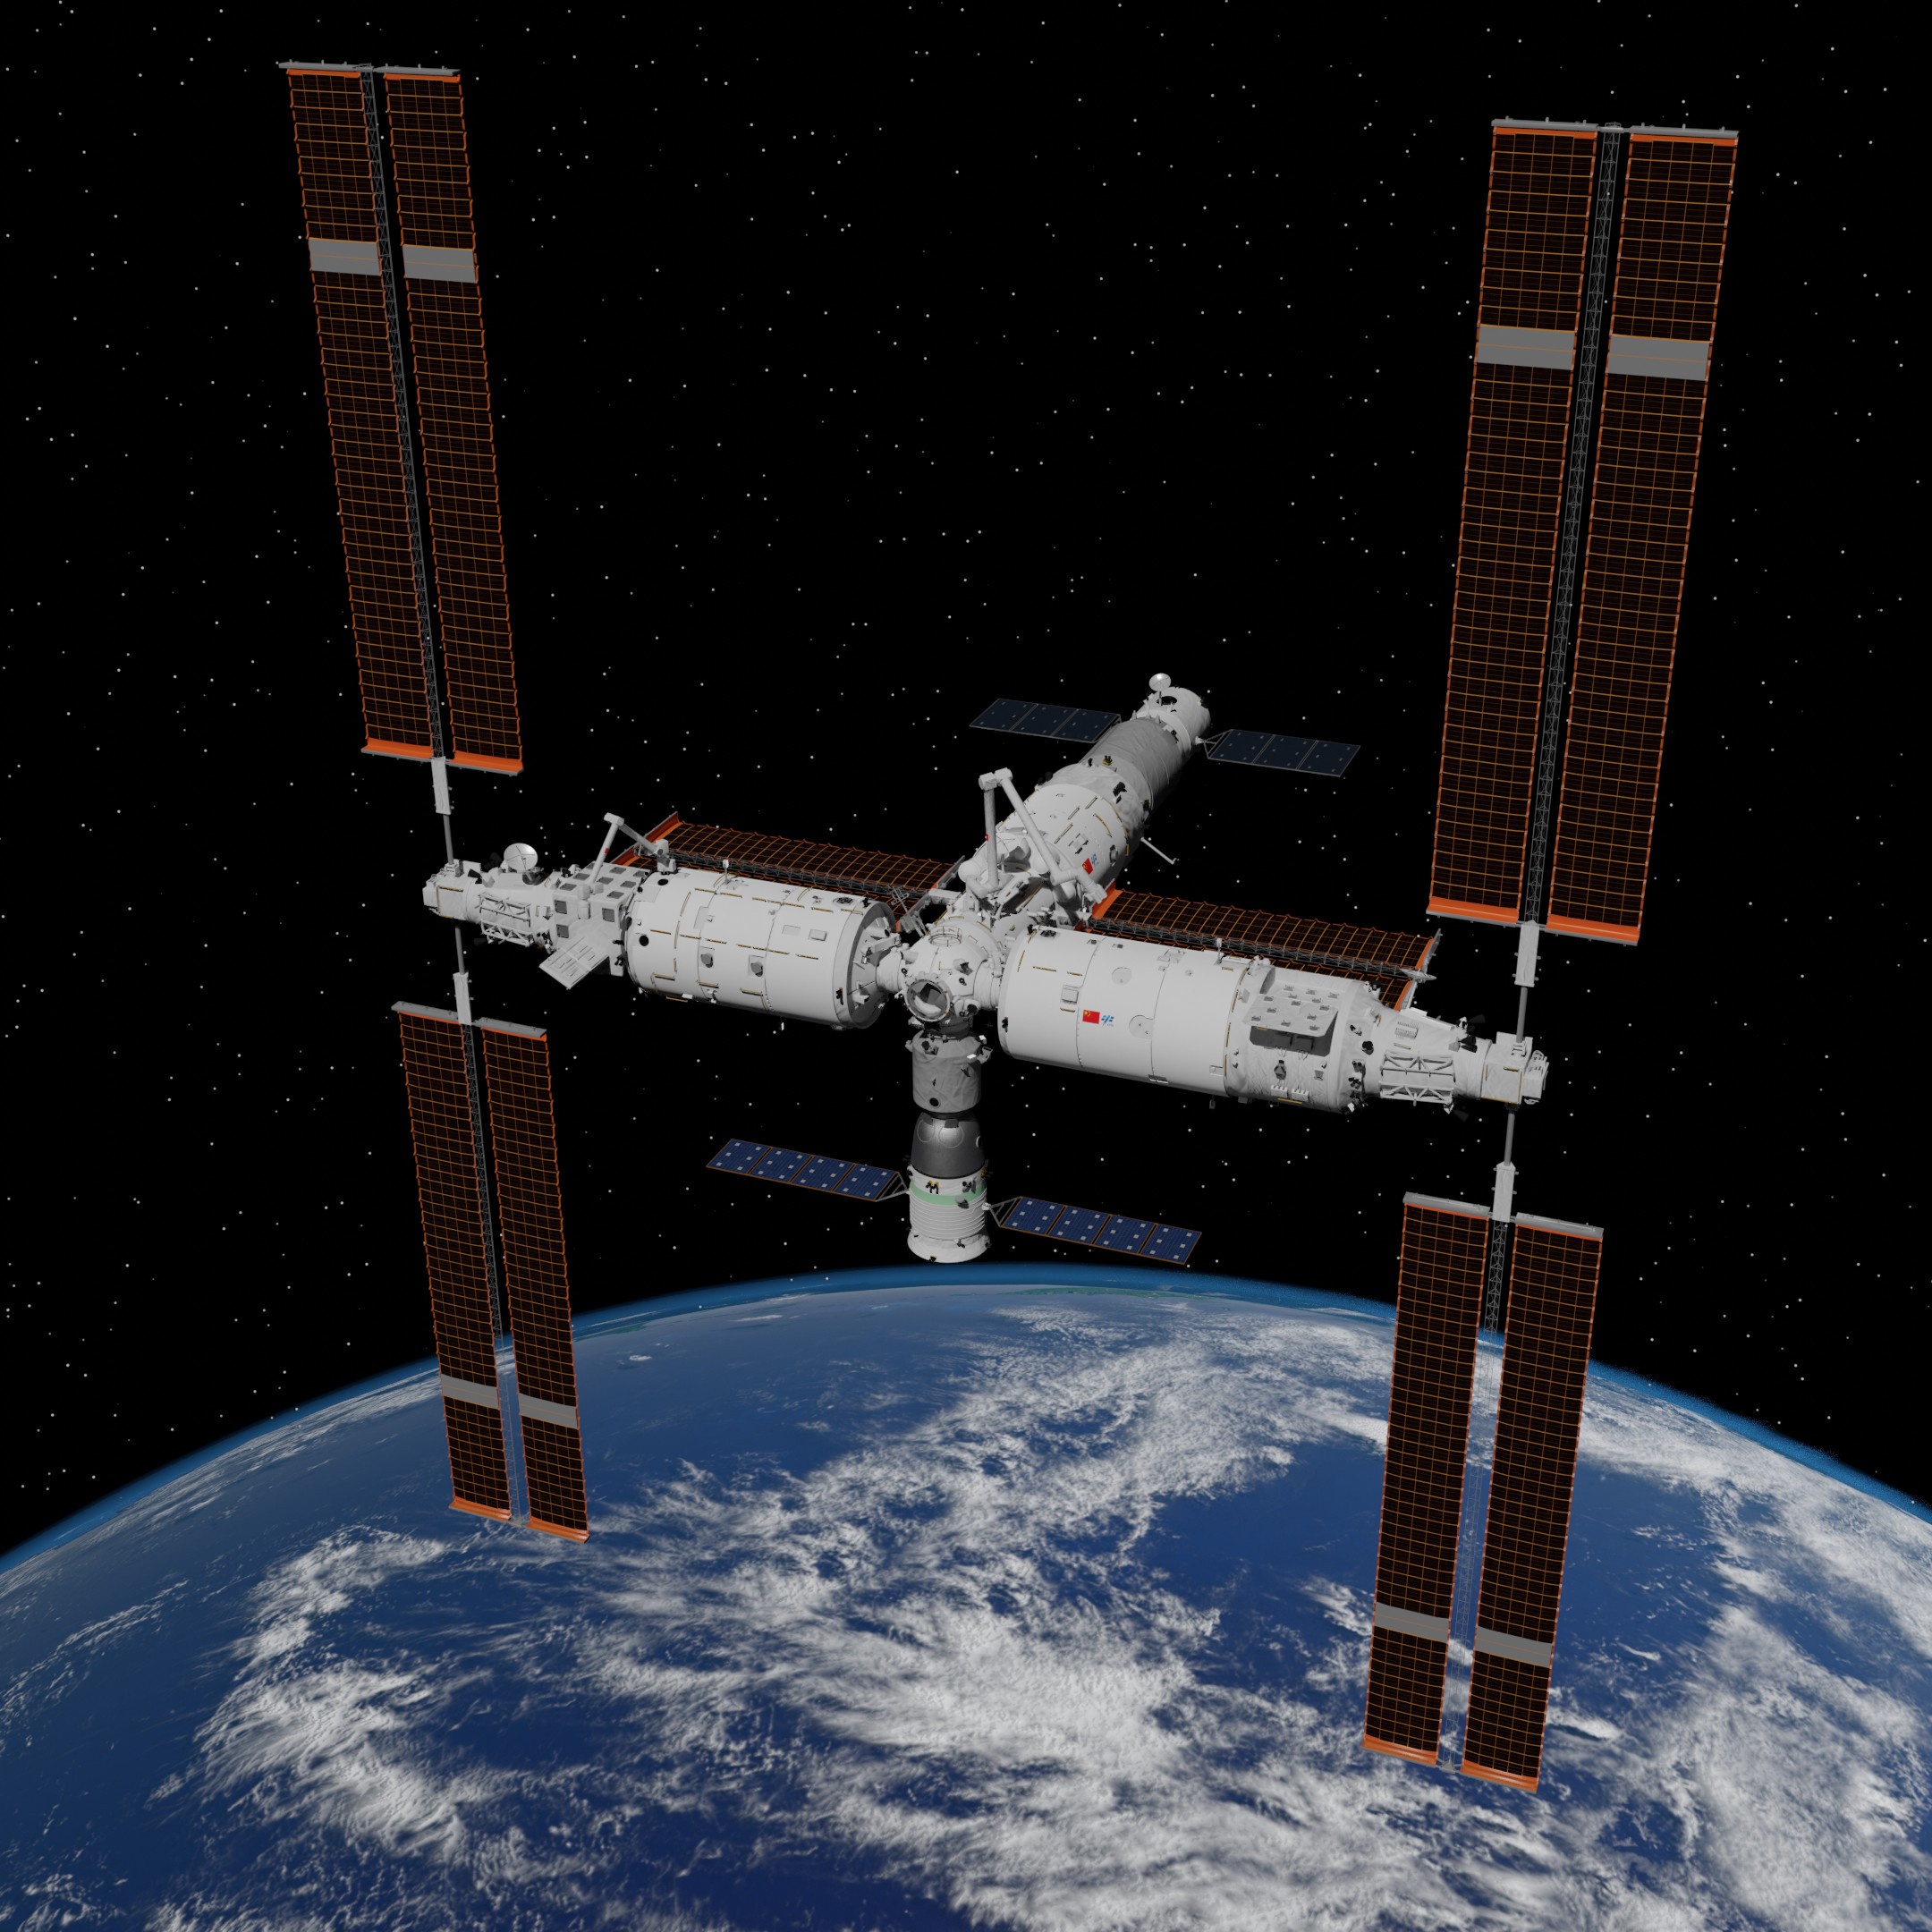 Mir Space Station: Testing Long-Term Stays in Space, mir